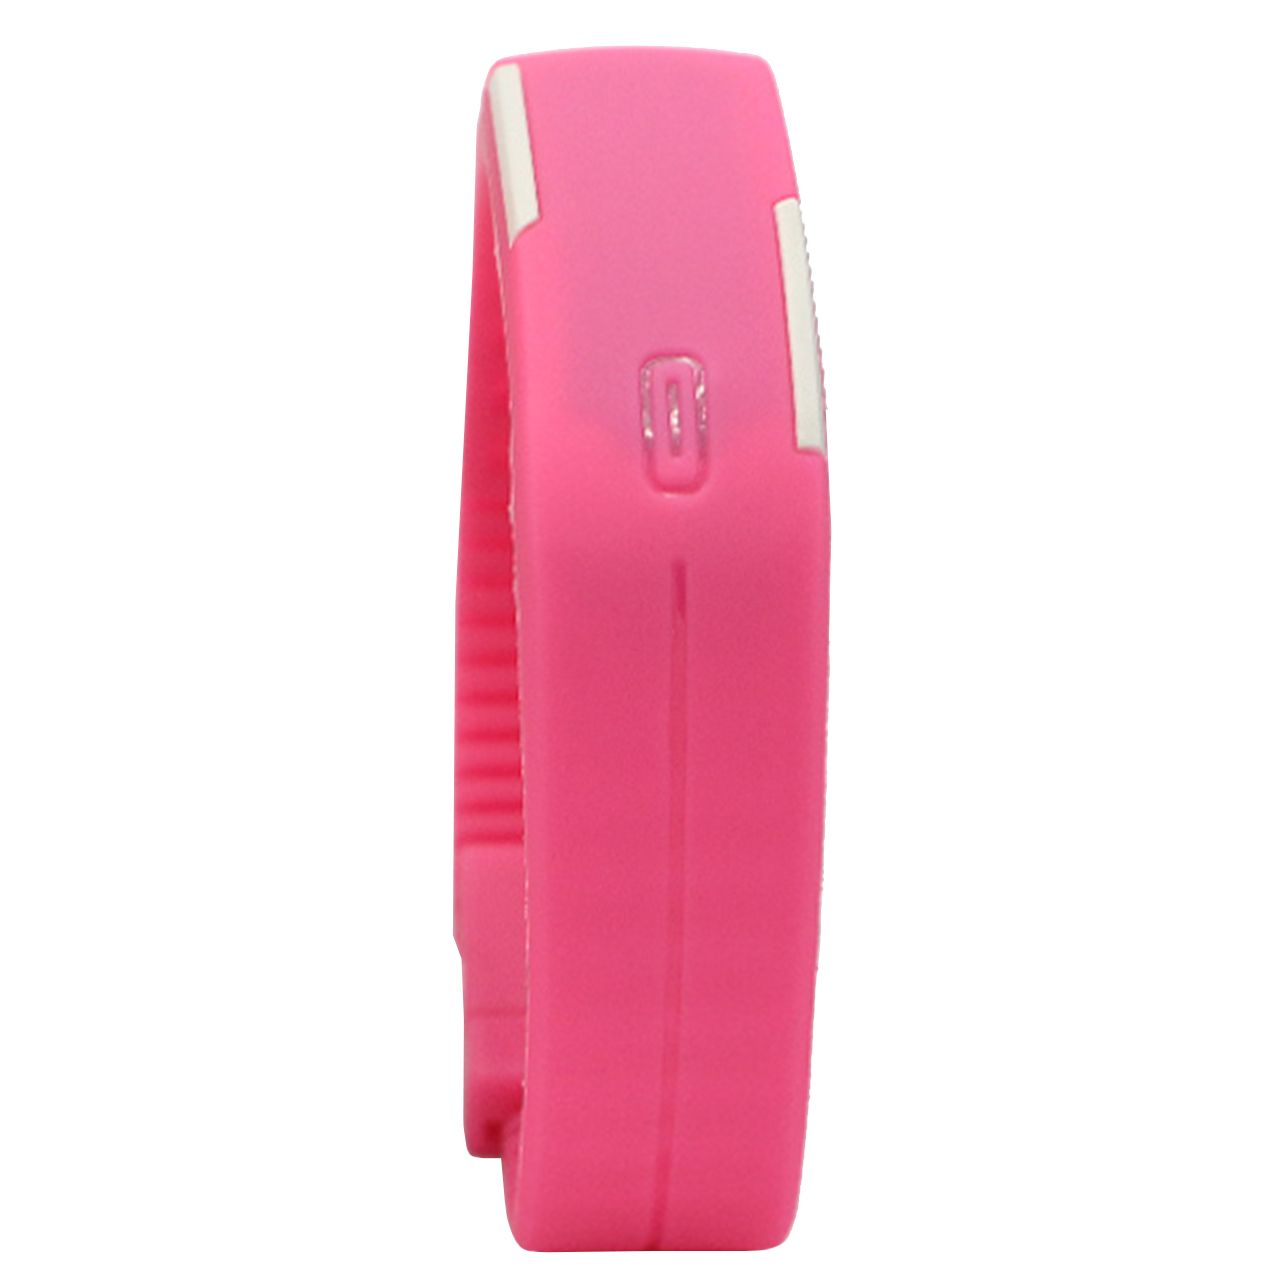 ساعت مچی دیجیتالی مدل Pink Neon -  - 1